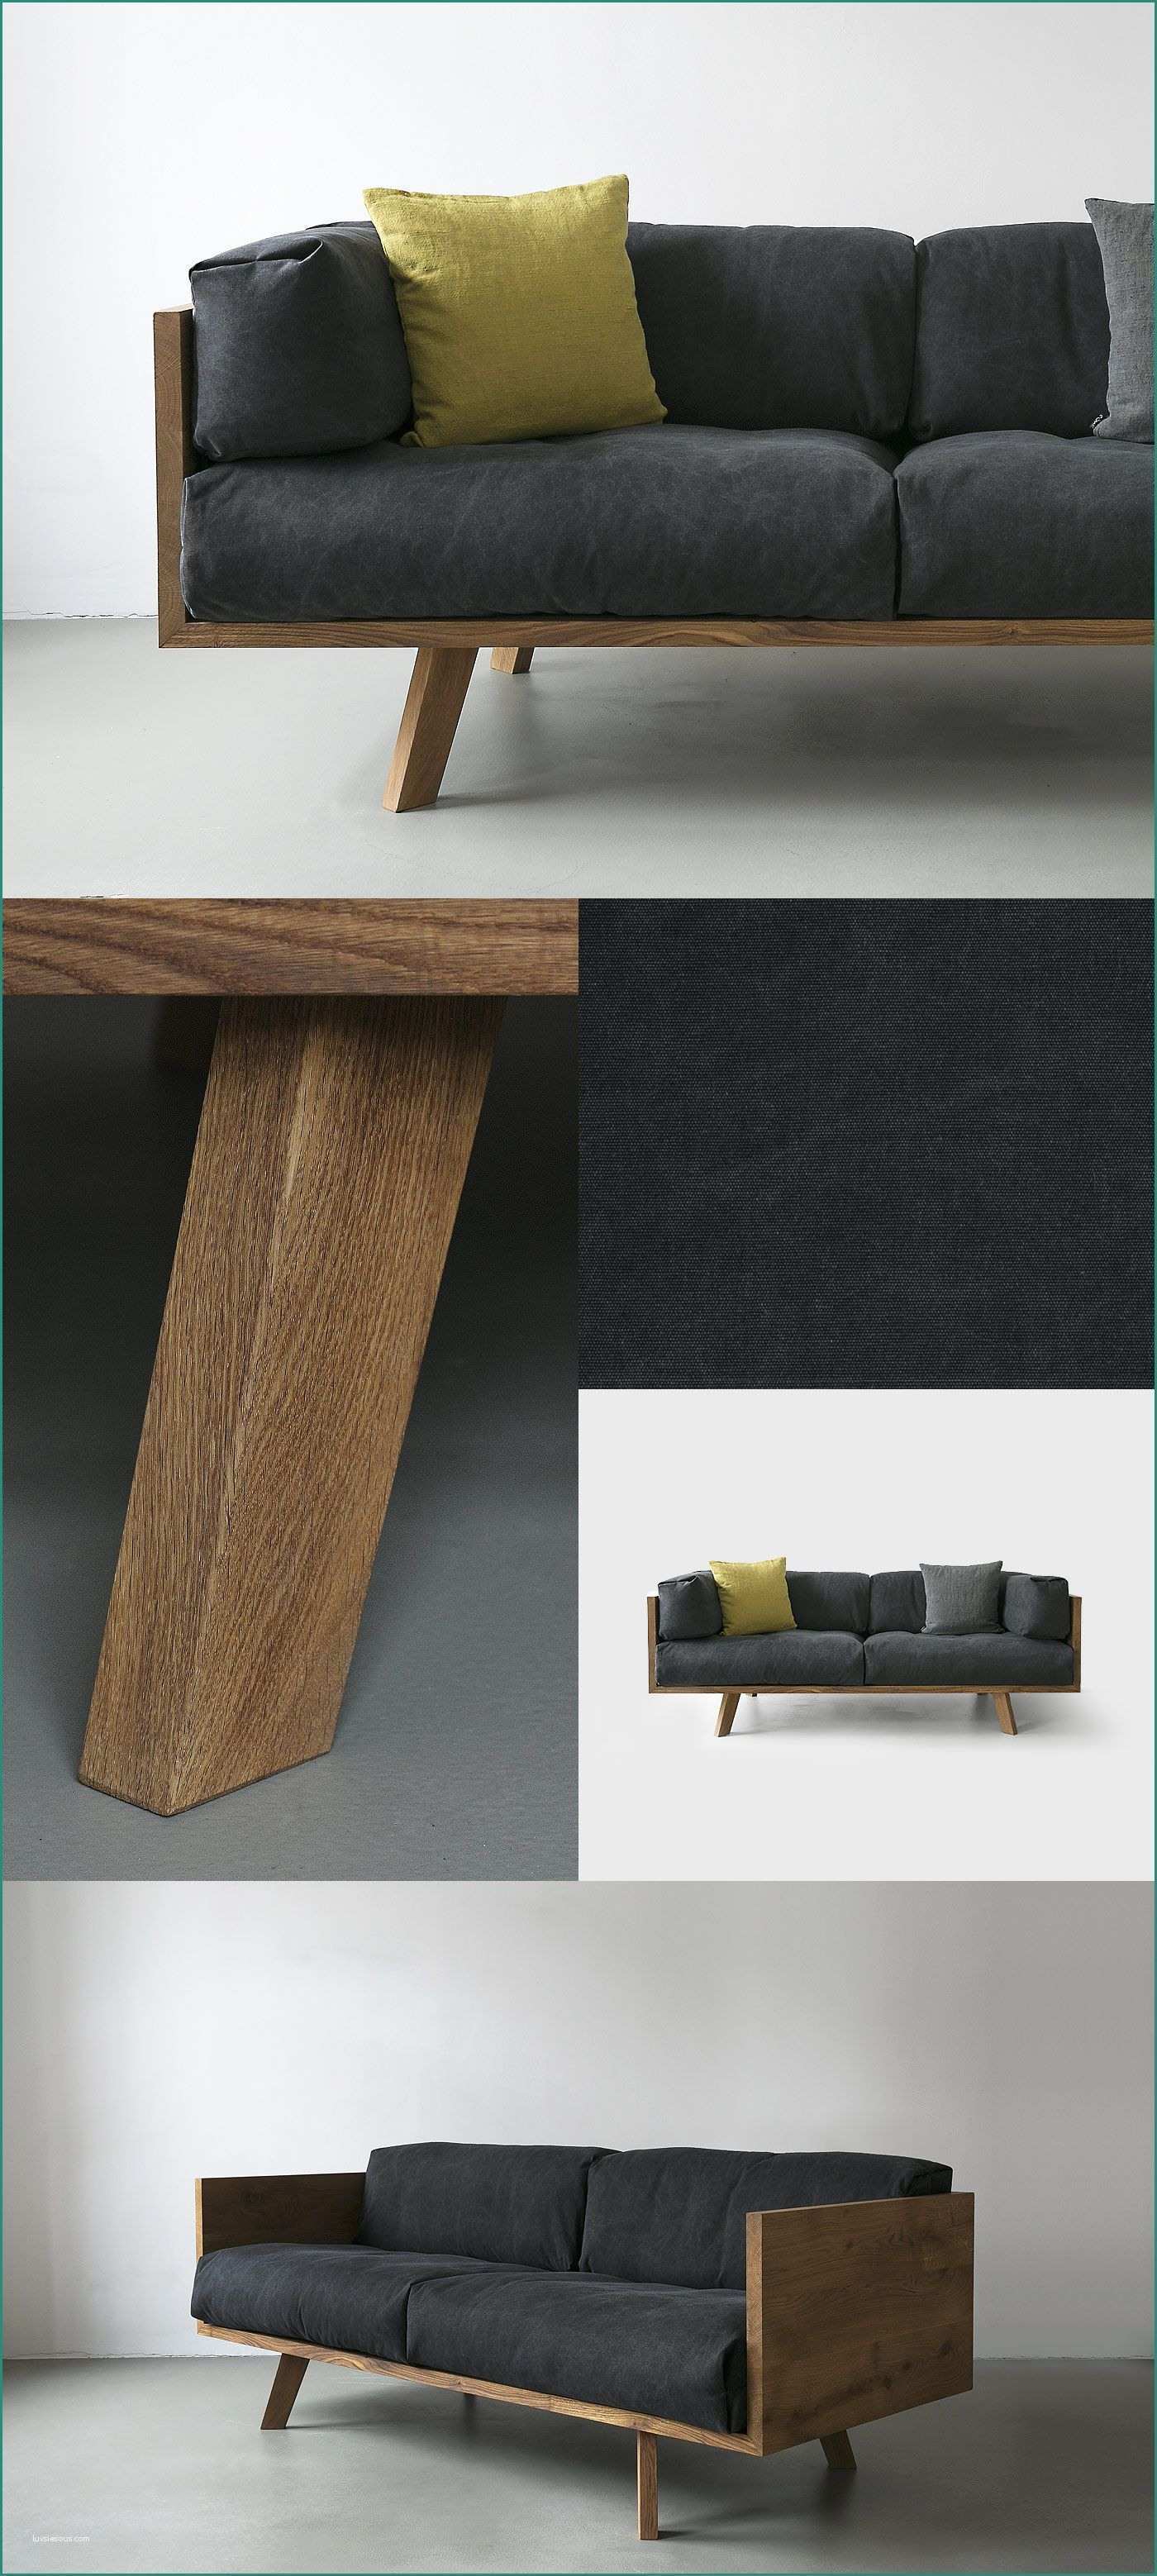 Poltrona Con Pouf E Diy Furniture I Möbel Selber Bauen I Couch sofa Daybed I Inspiration